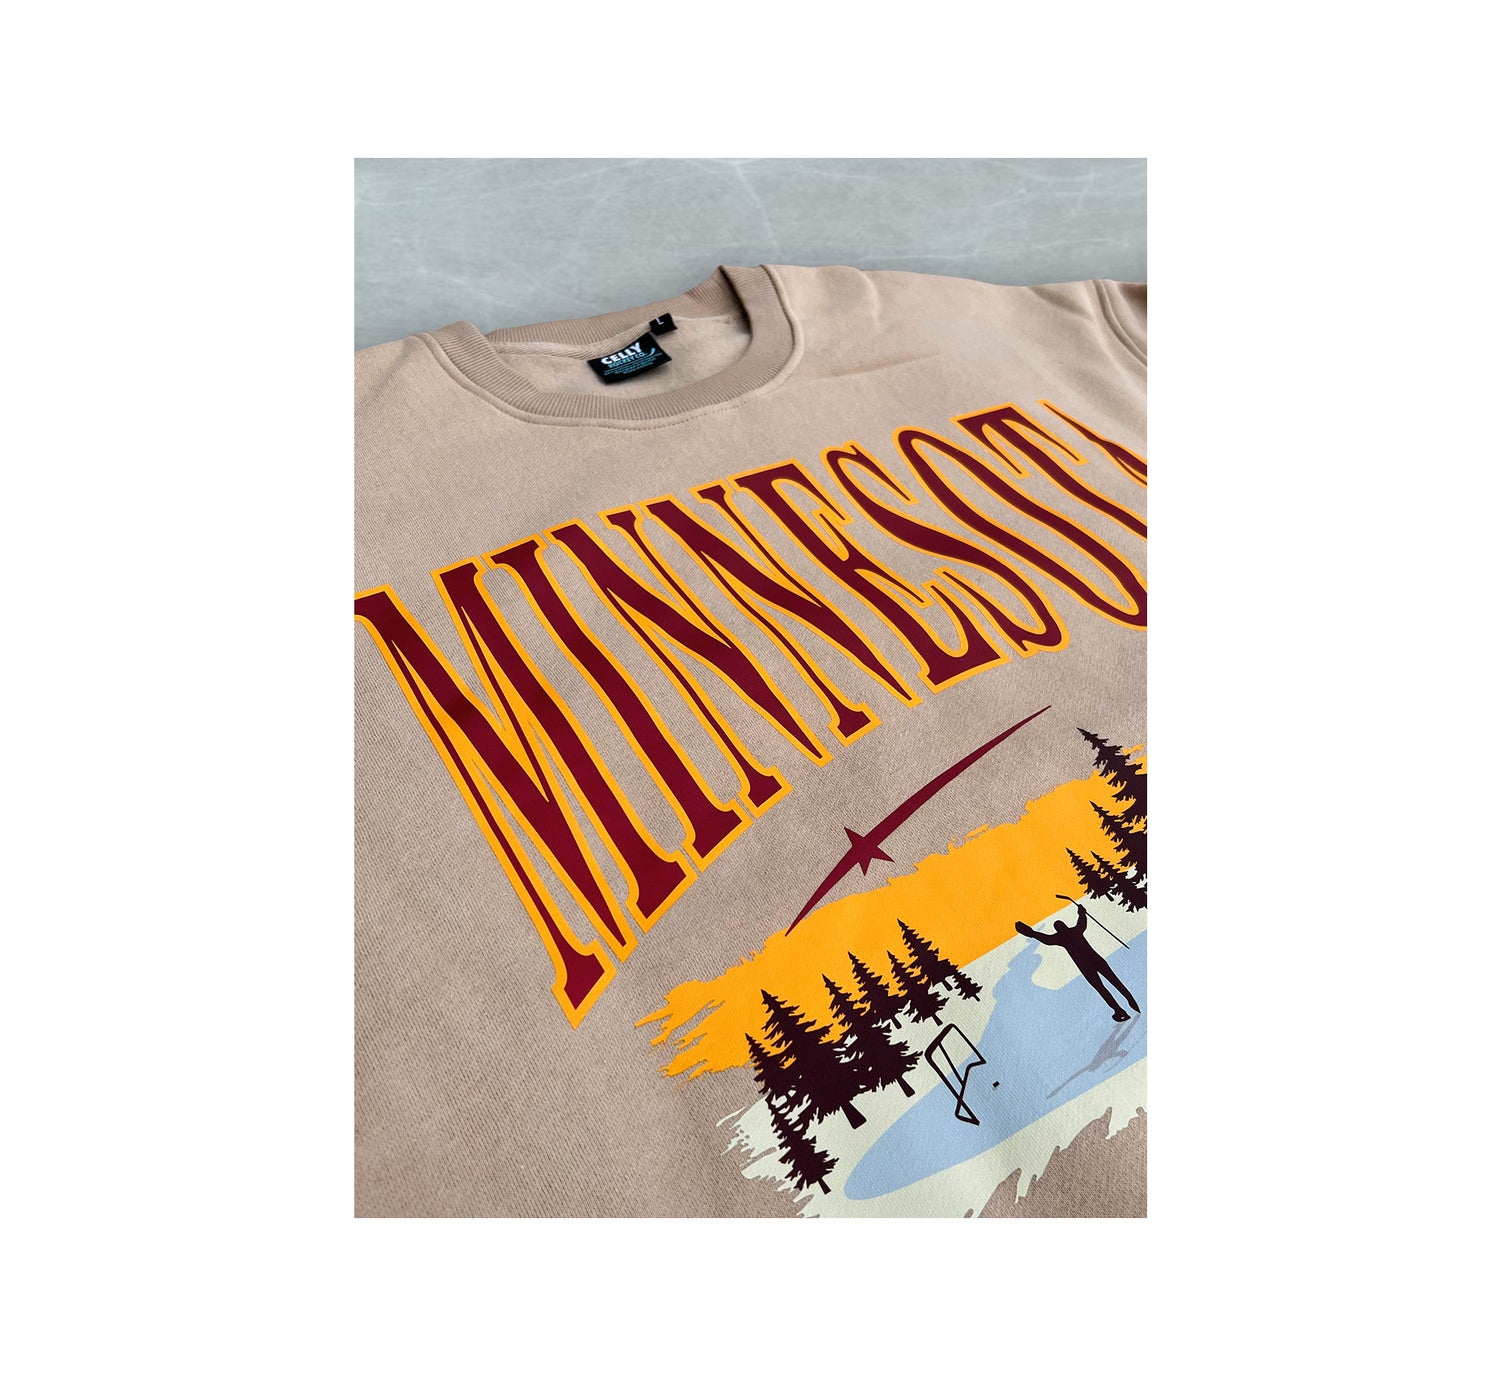 Minnesota Hockey T-Shirt | Northmade Co. XL